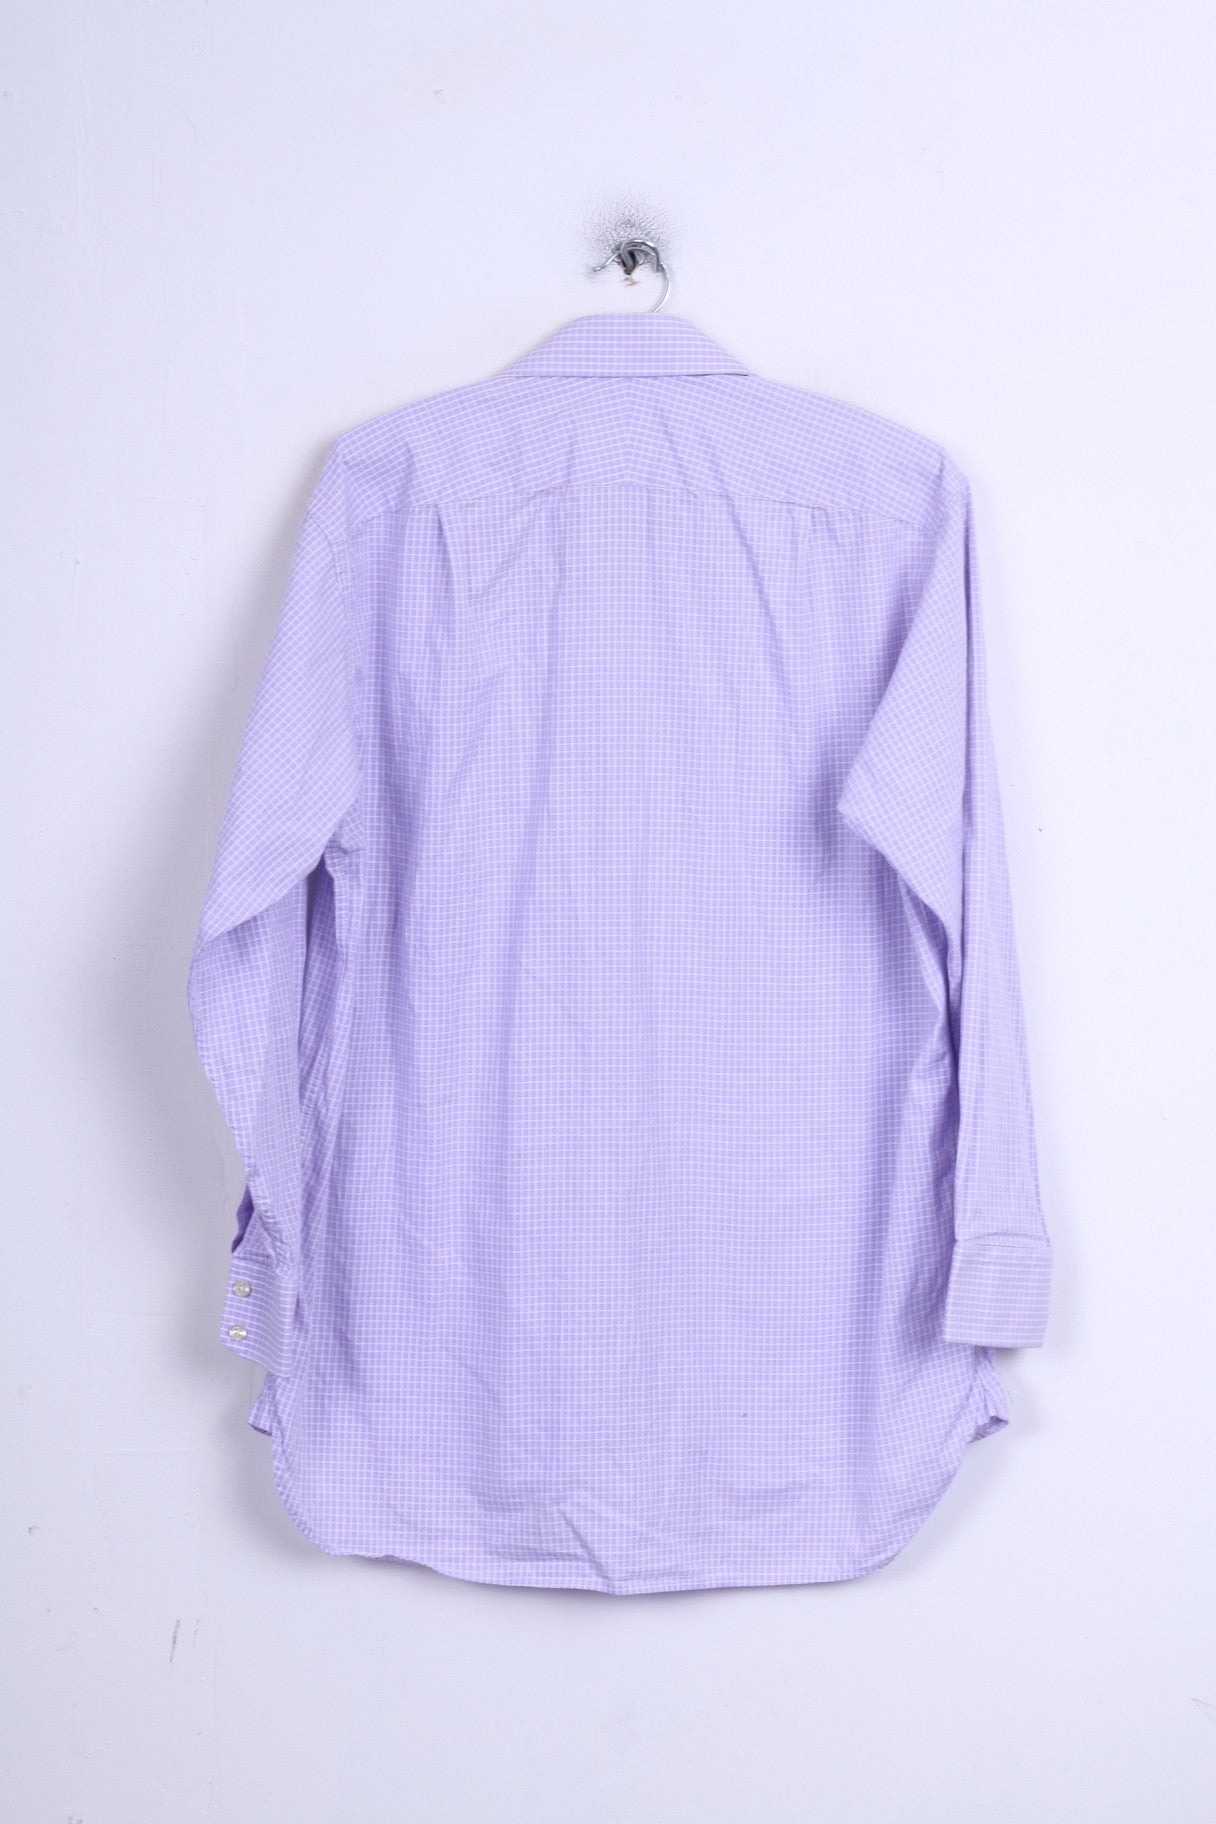 Charles Tyrwhitt Mens 16.5/34 Casual Shirt Lilac Cotton Jermyn Street London